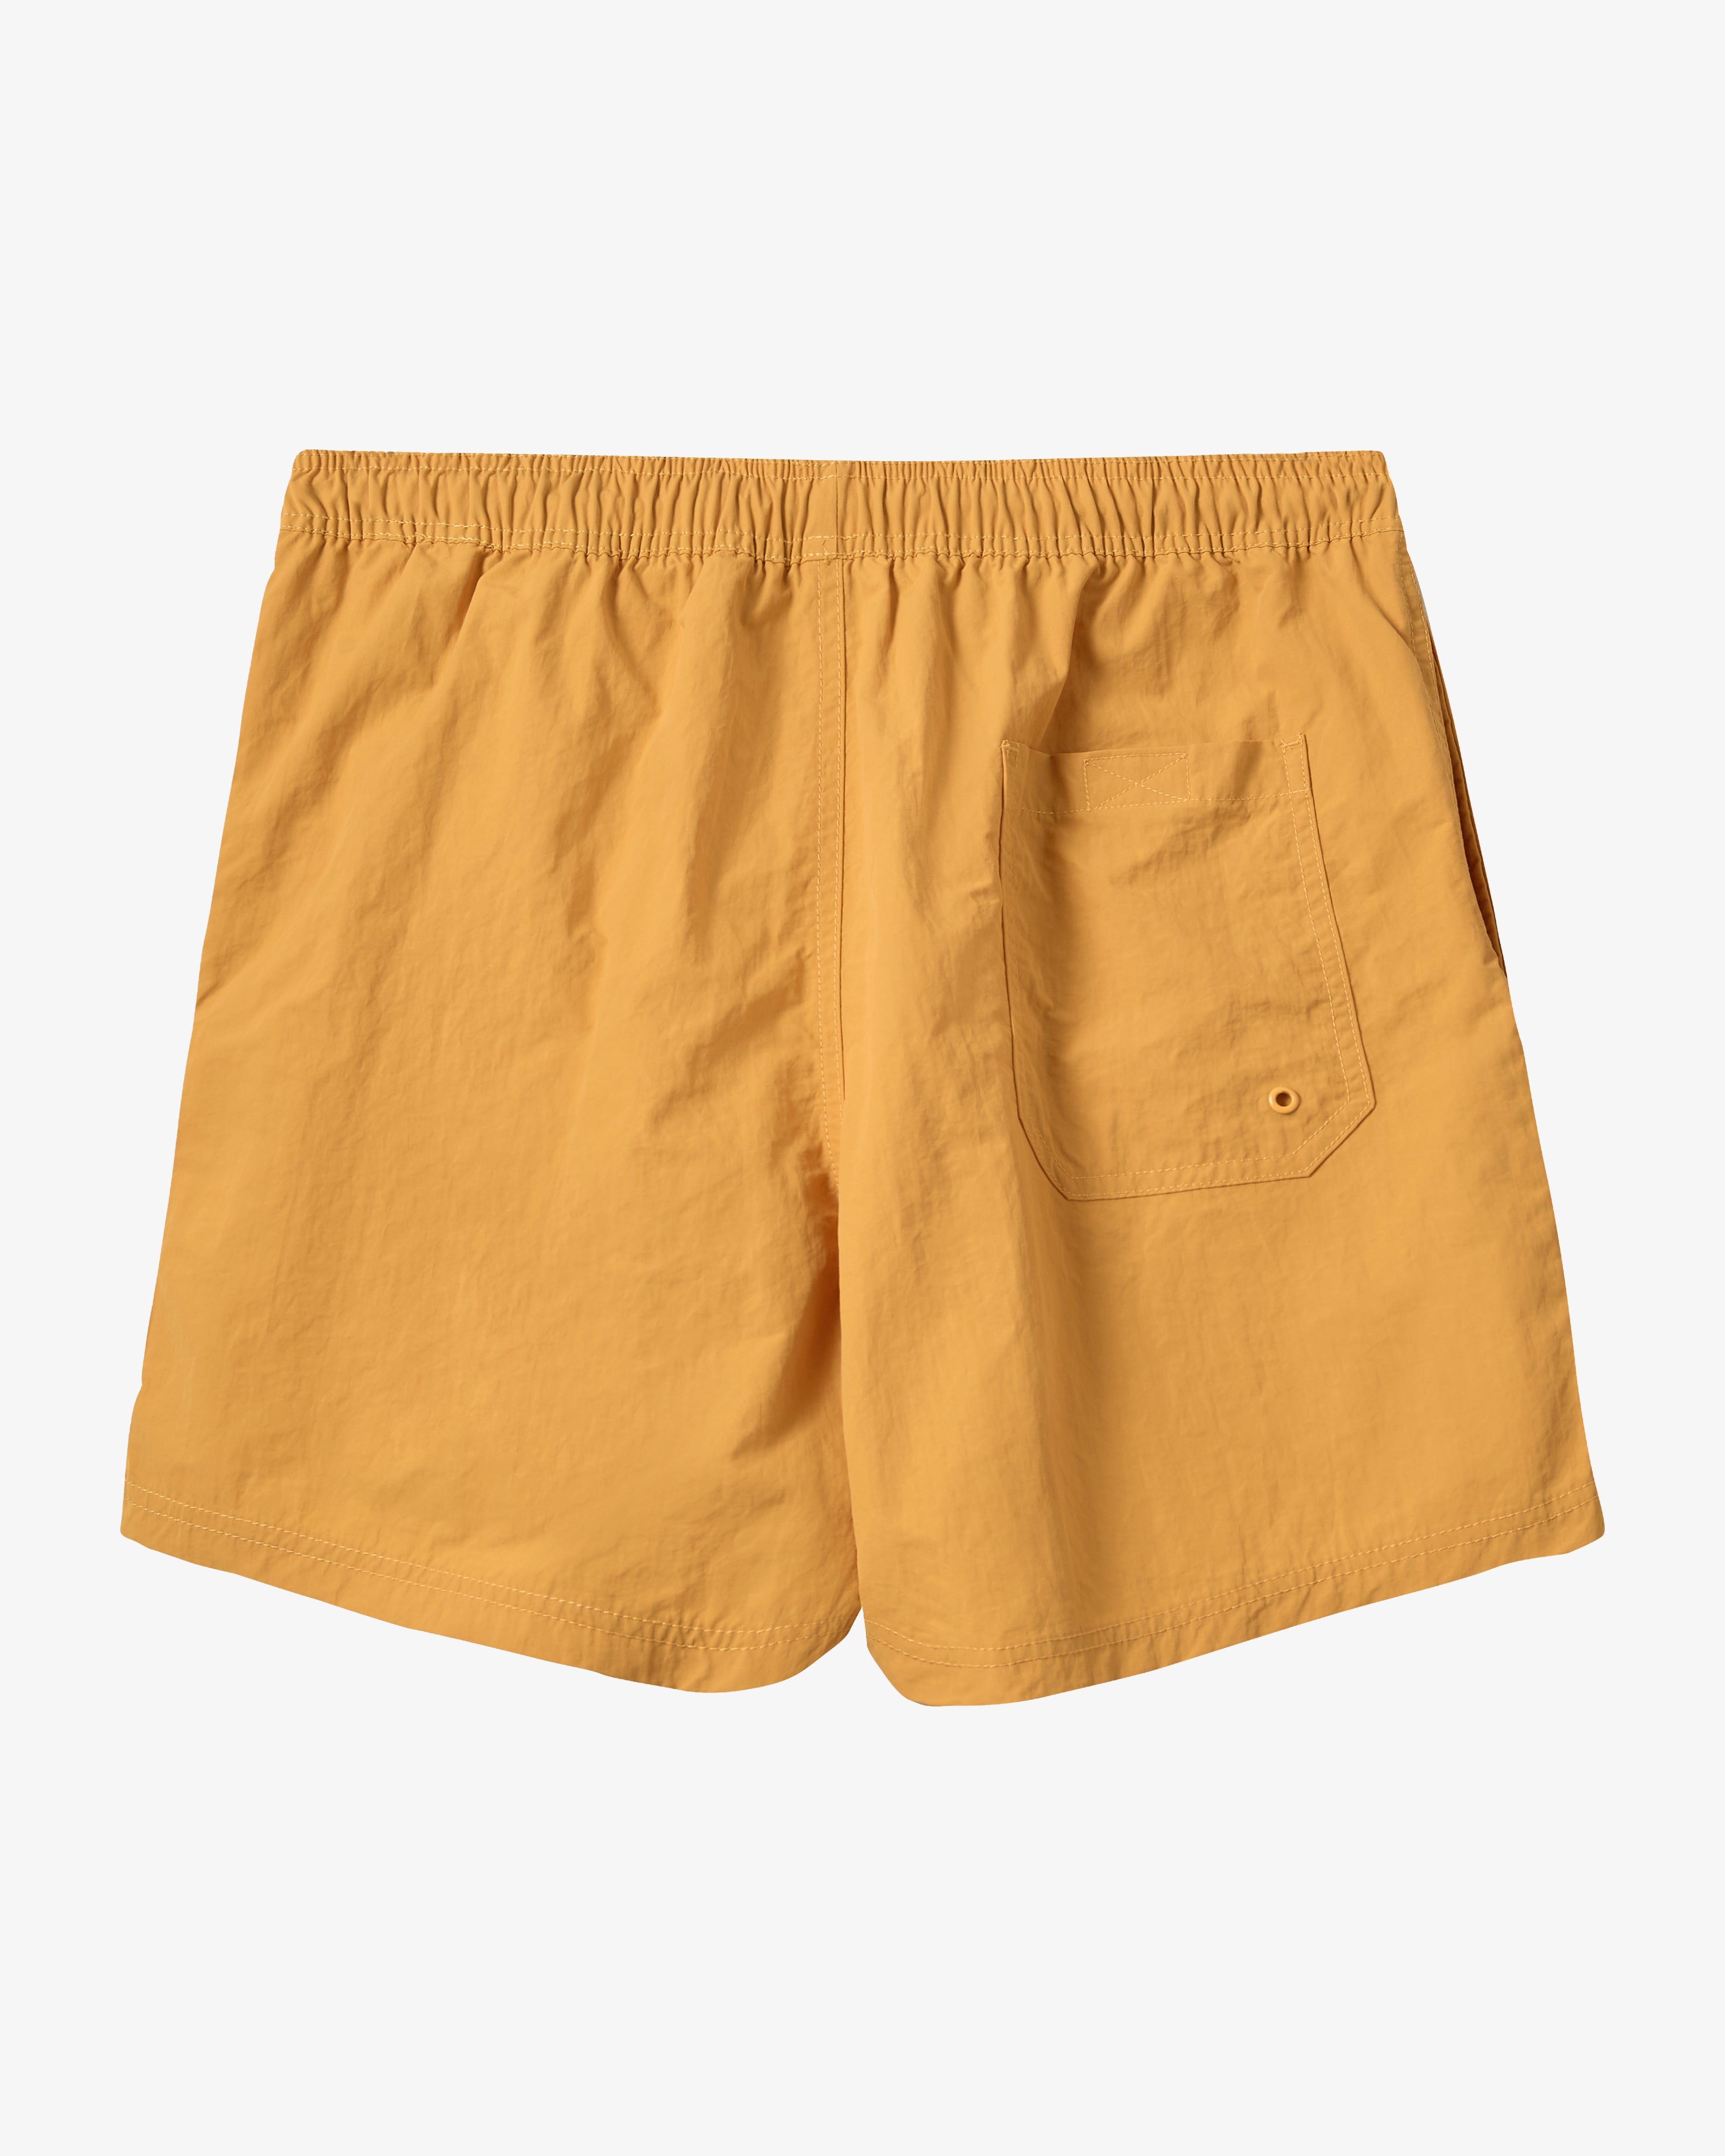 H2O Basic Leisure Badeshorts Shorts 2049 Apricot